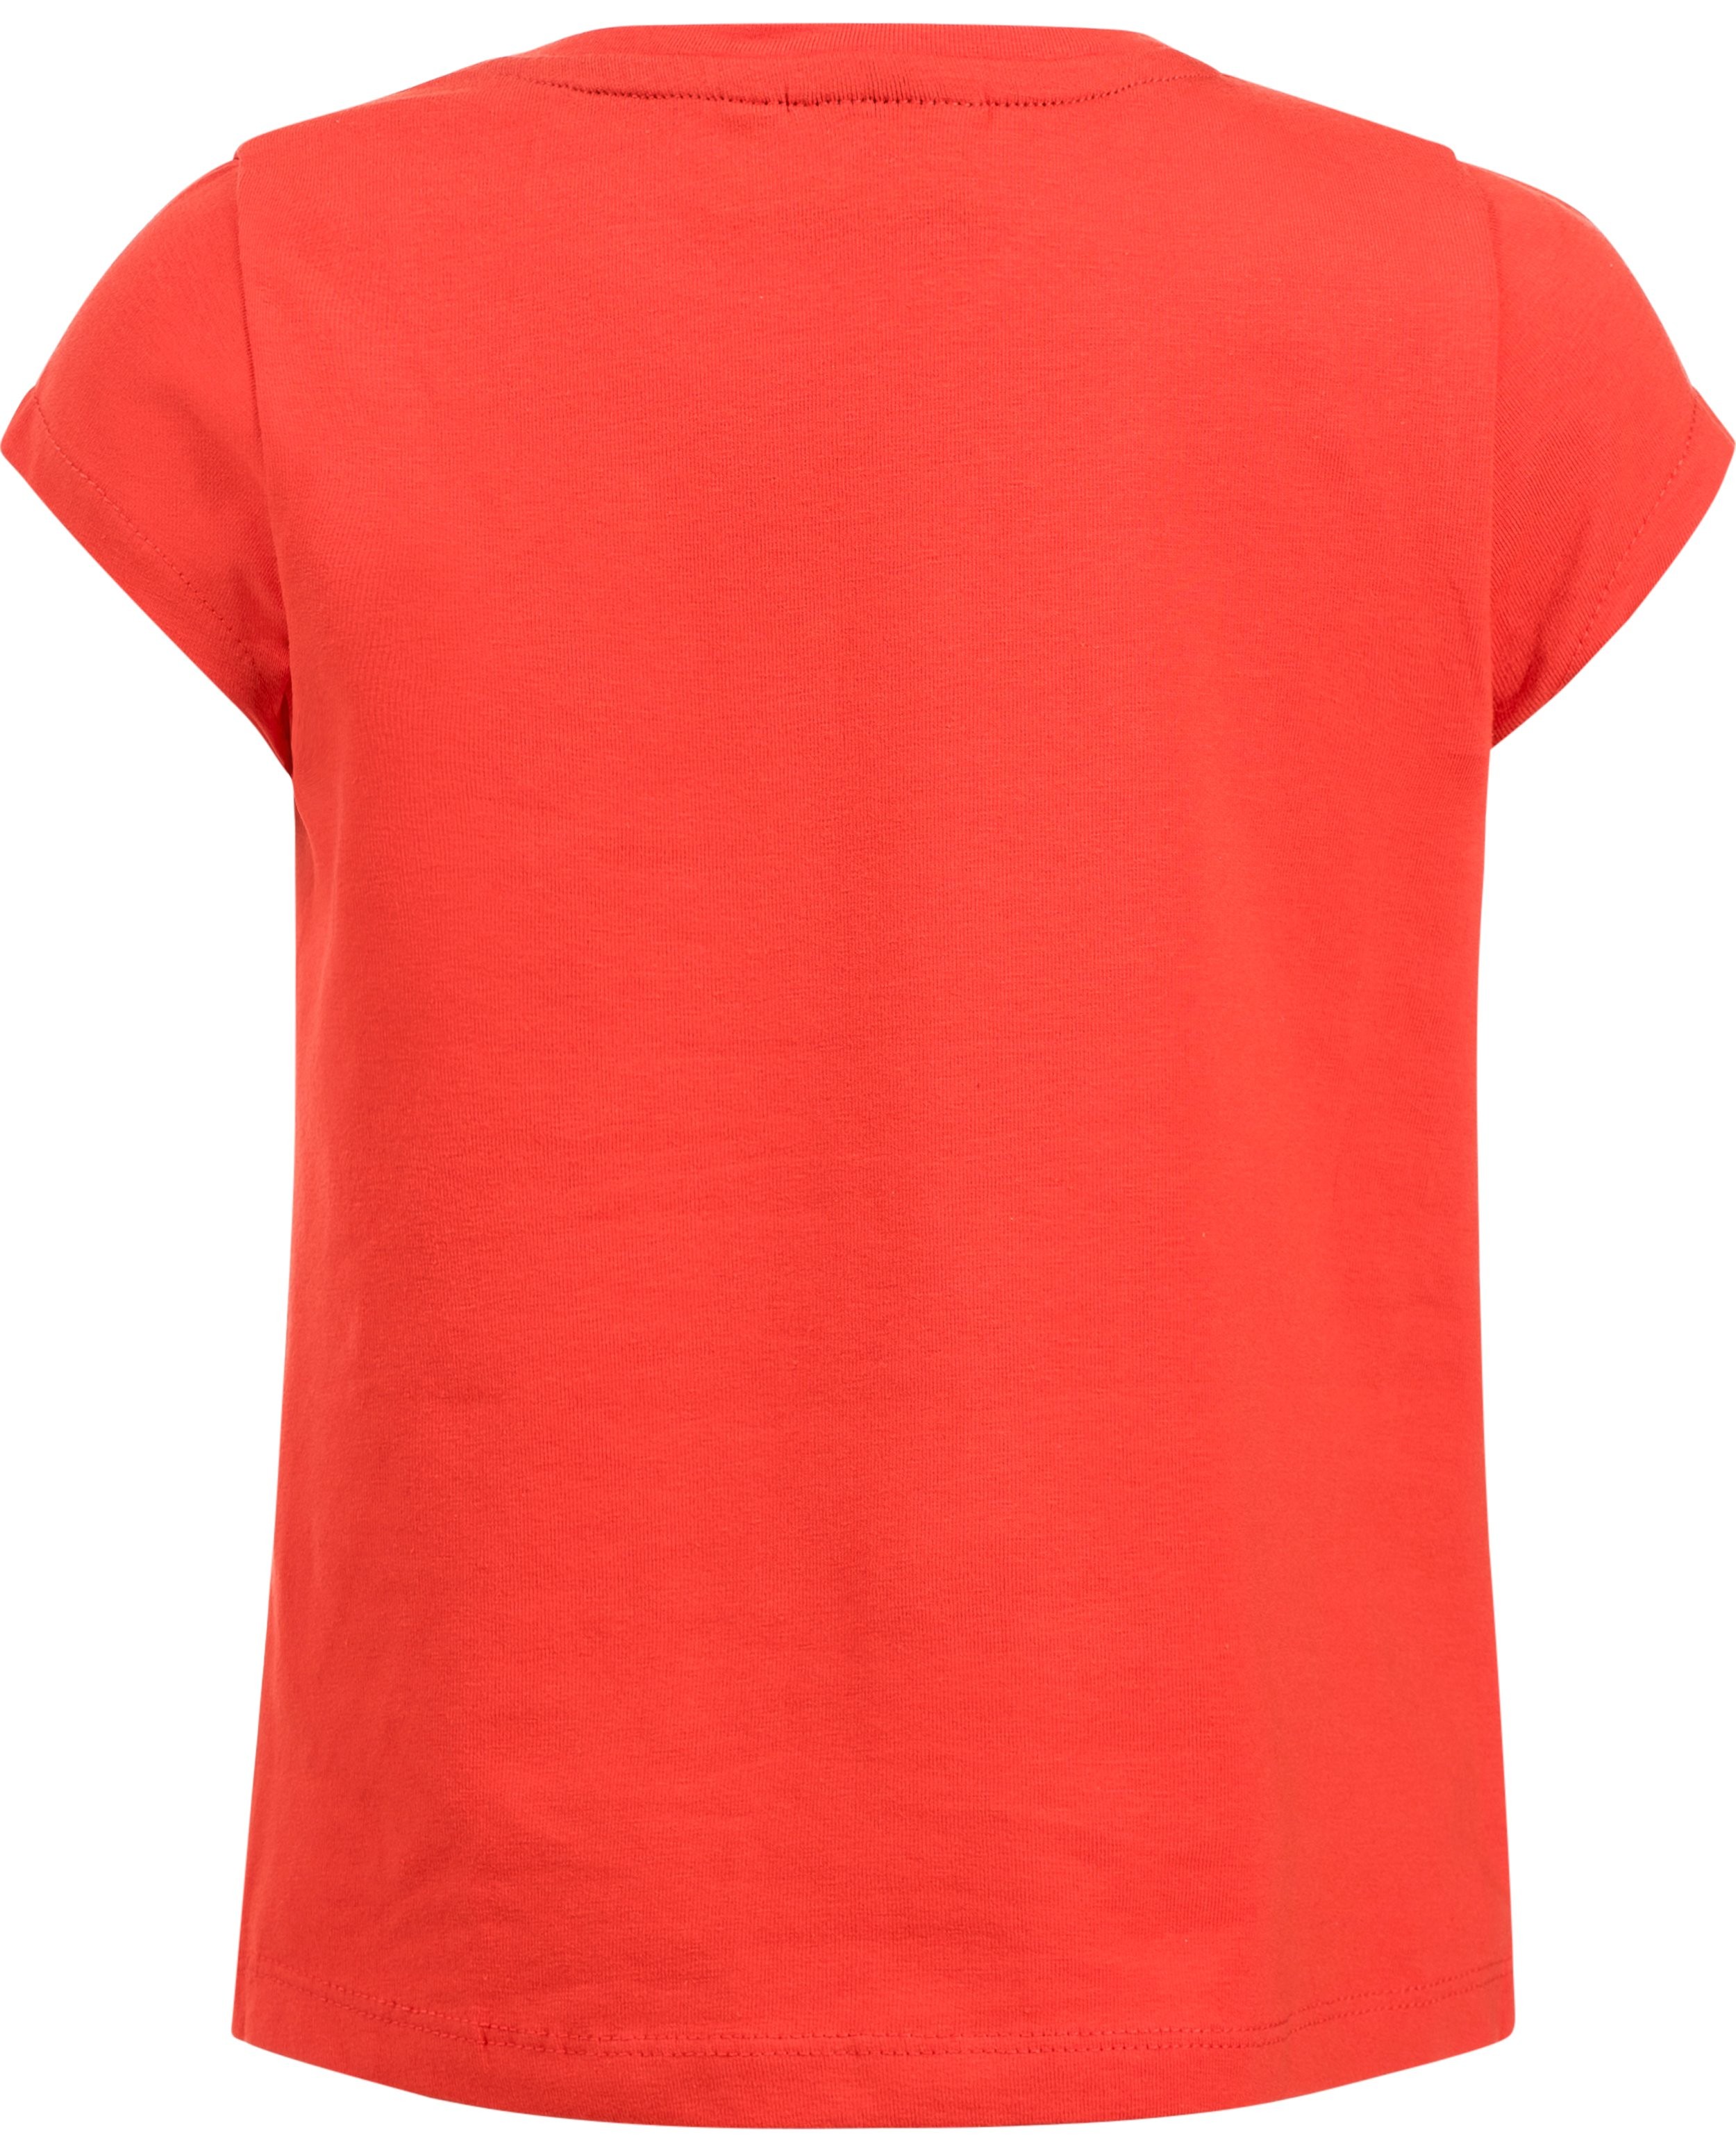 T-shirts - T-shirt swipe rouge